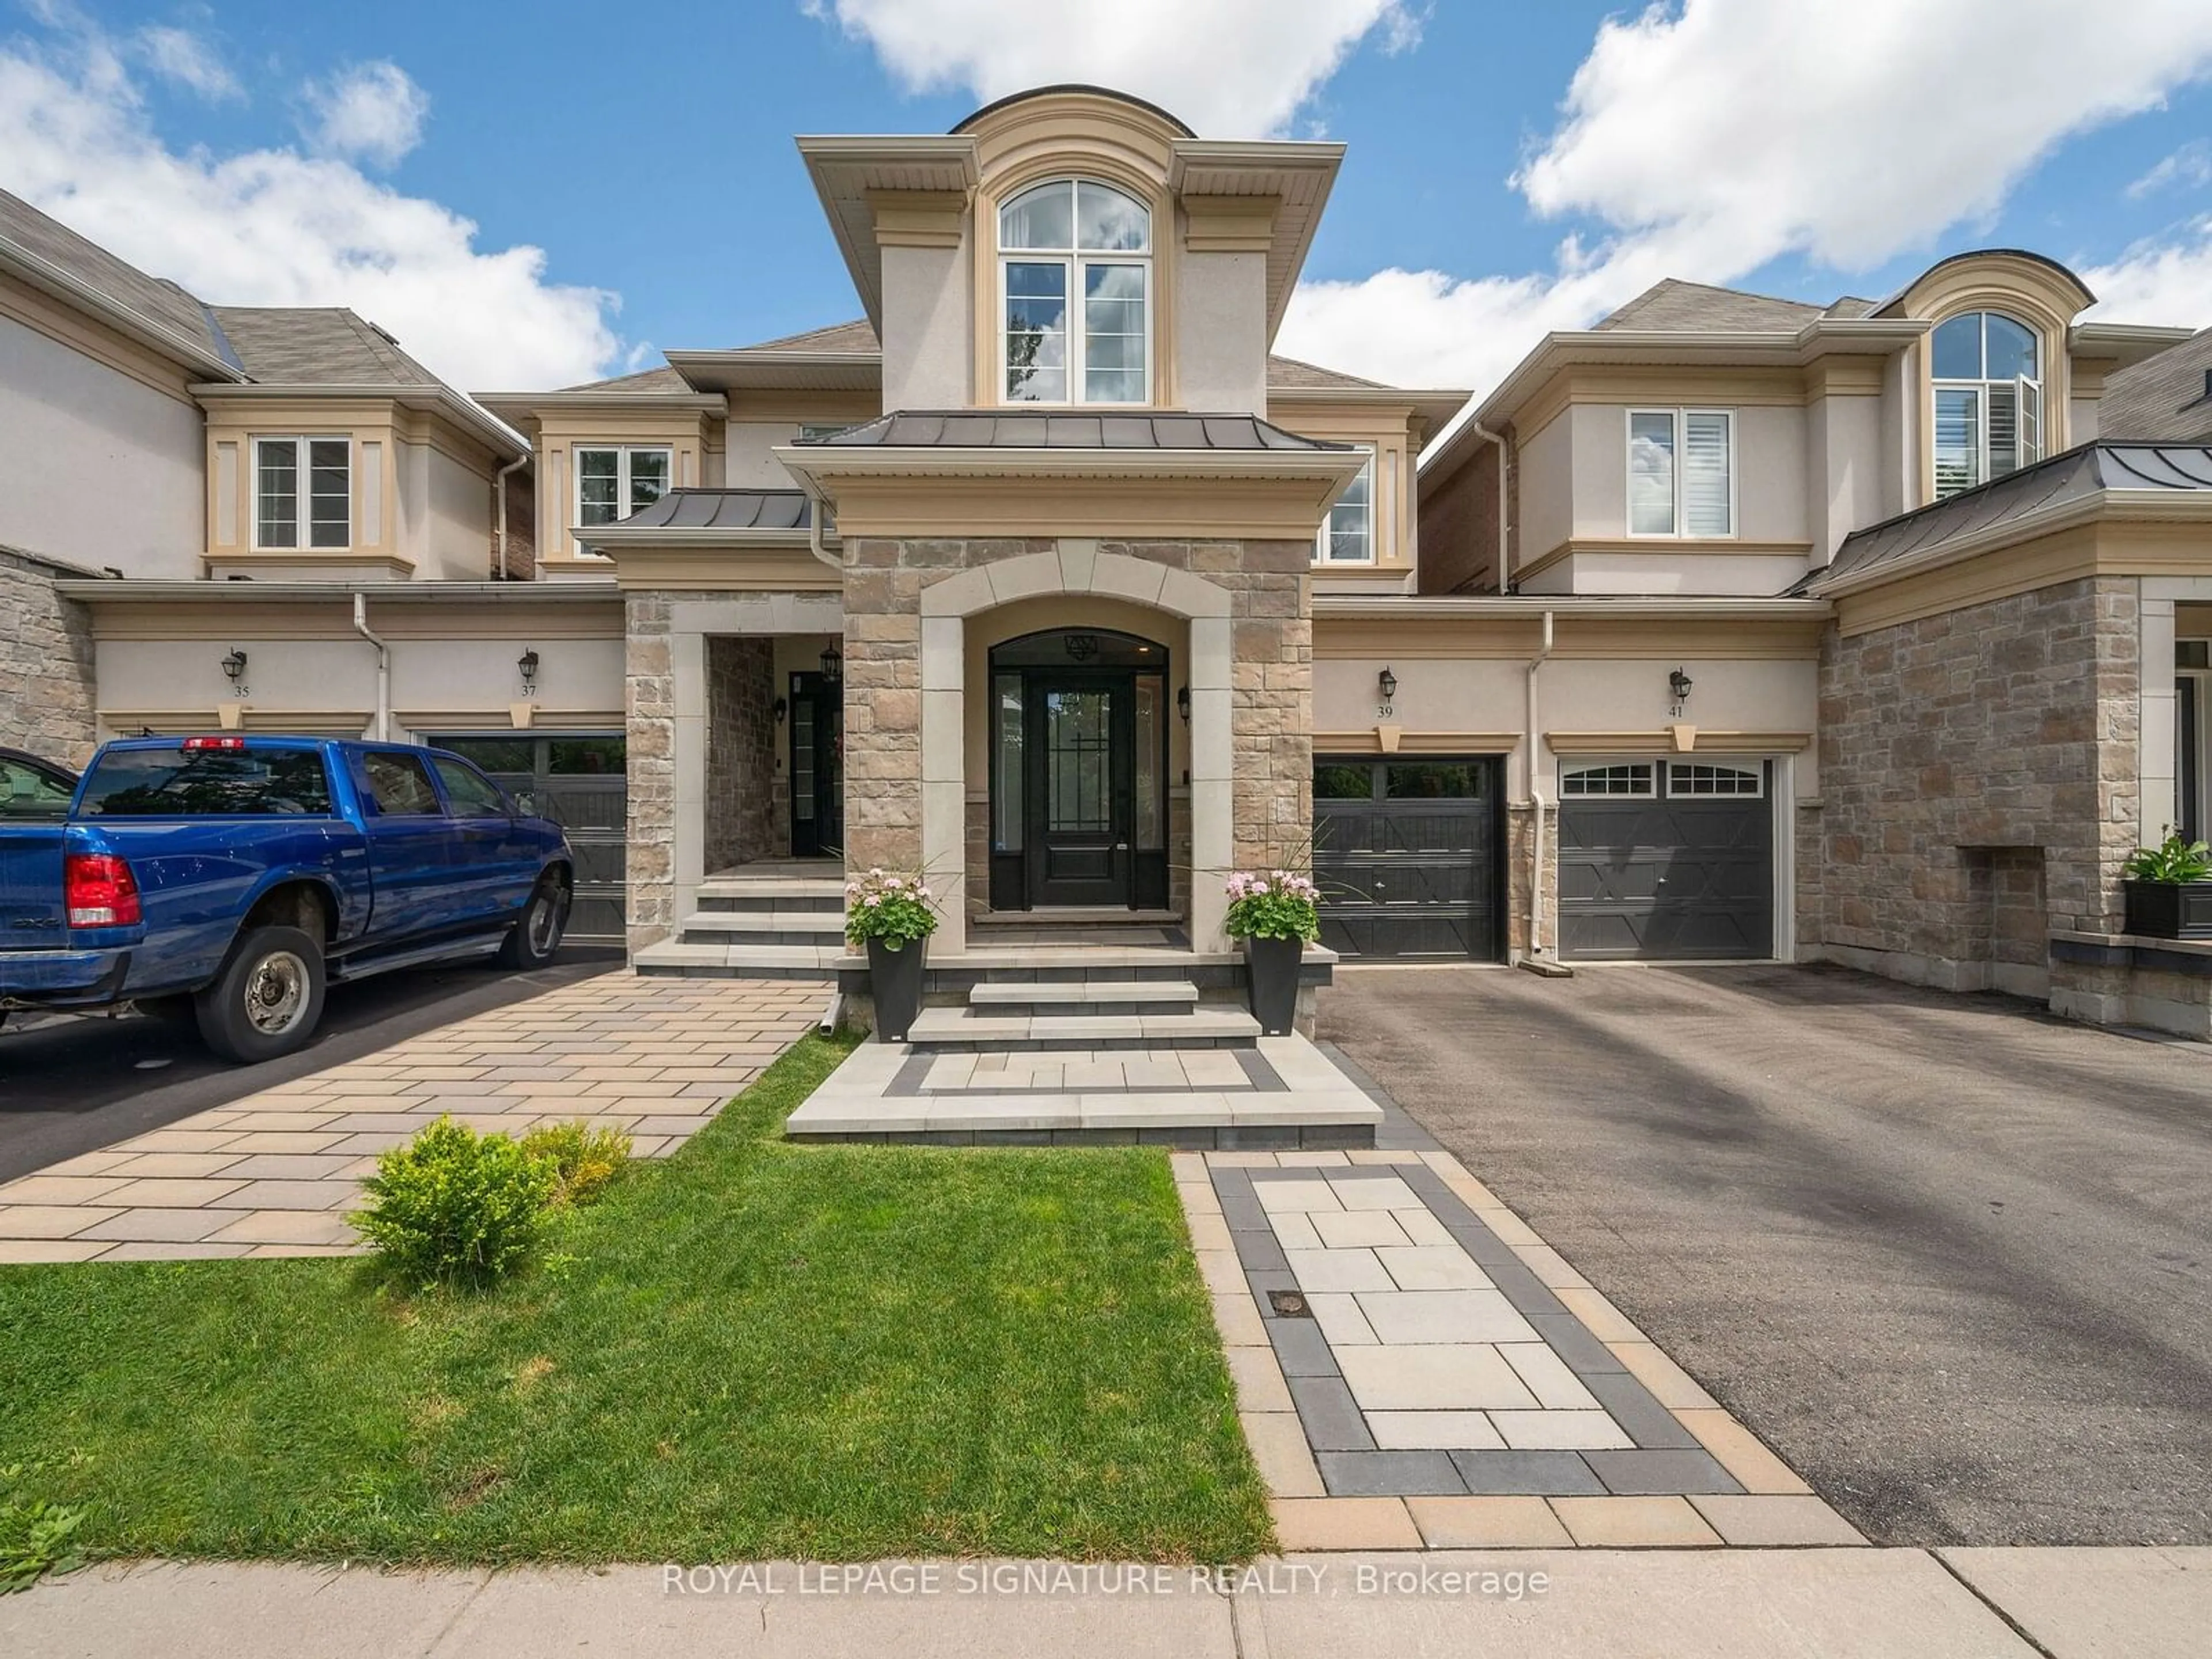 Home with brick exterior material for 39 Ridgegate Cres, Halton Hills Ontario L7G 0L6